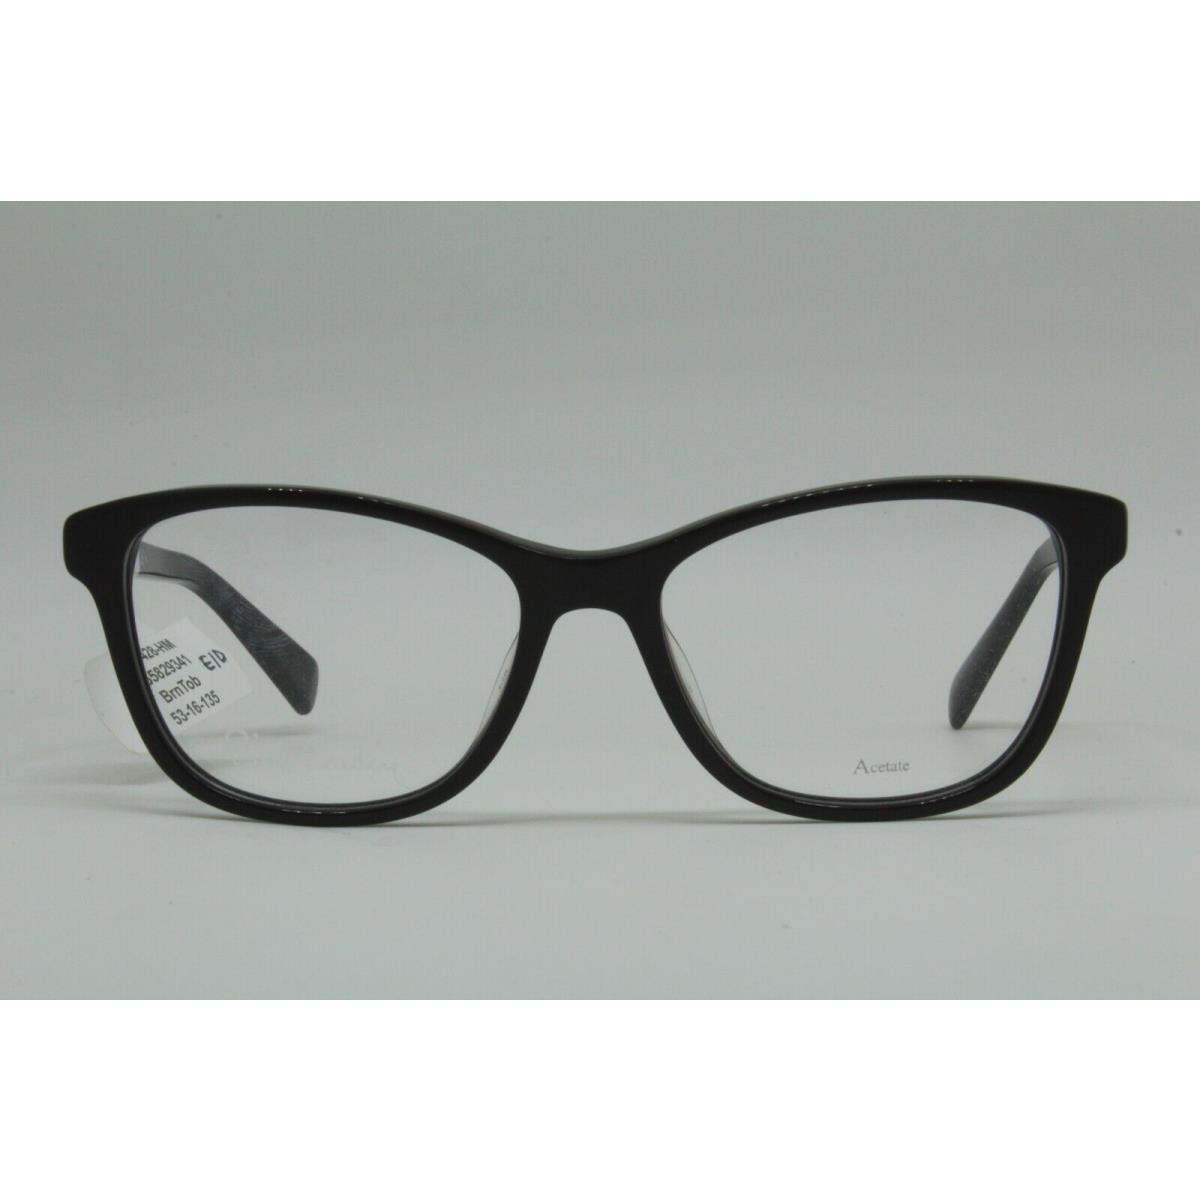 1 Unit Pierre Cardin Eyeglass Frames 53/16/135 Prescription Vision Optical 168